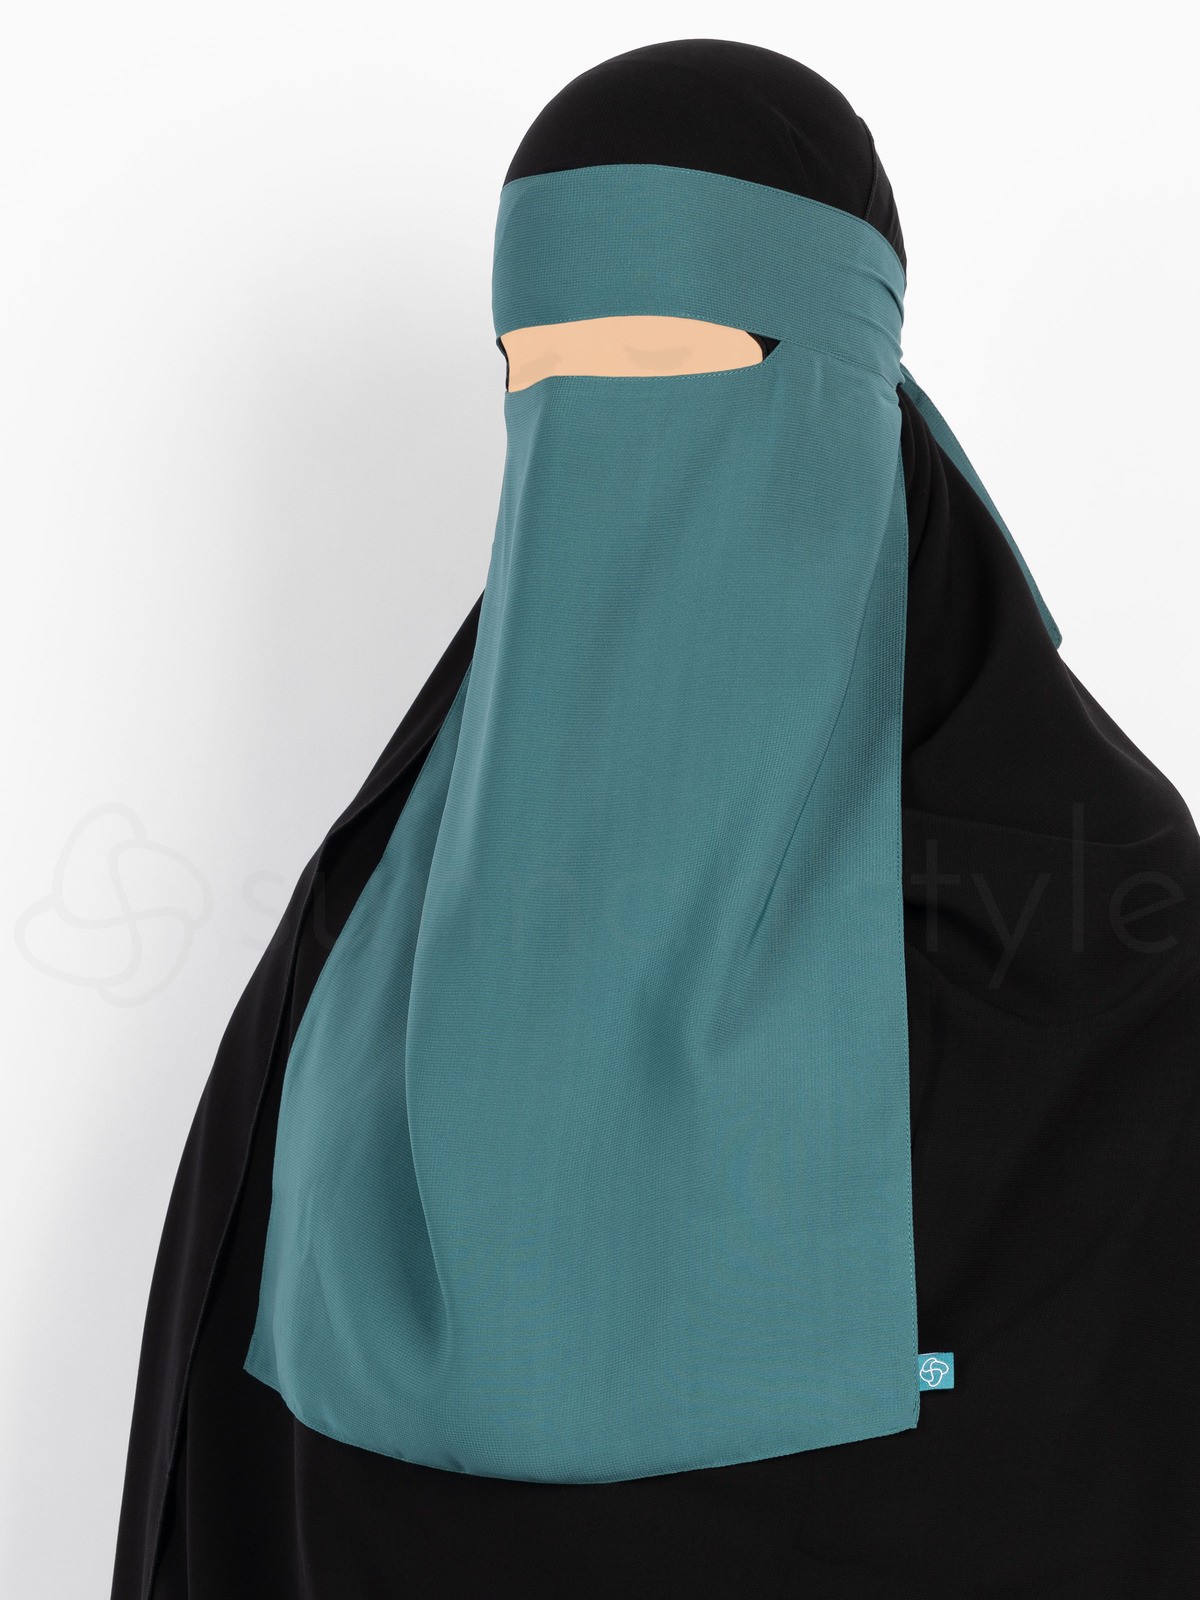 Sunnah Style - Narrow No-Pinch One Layer Niqab (Teal)